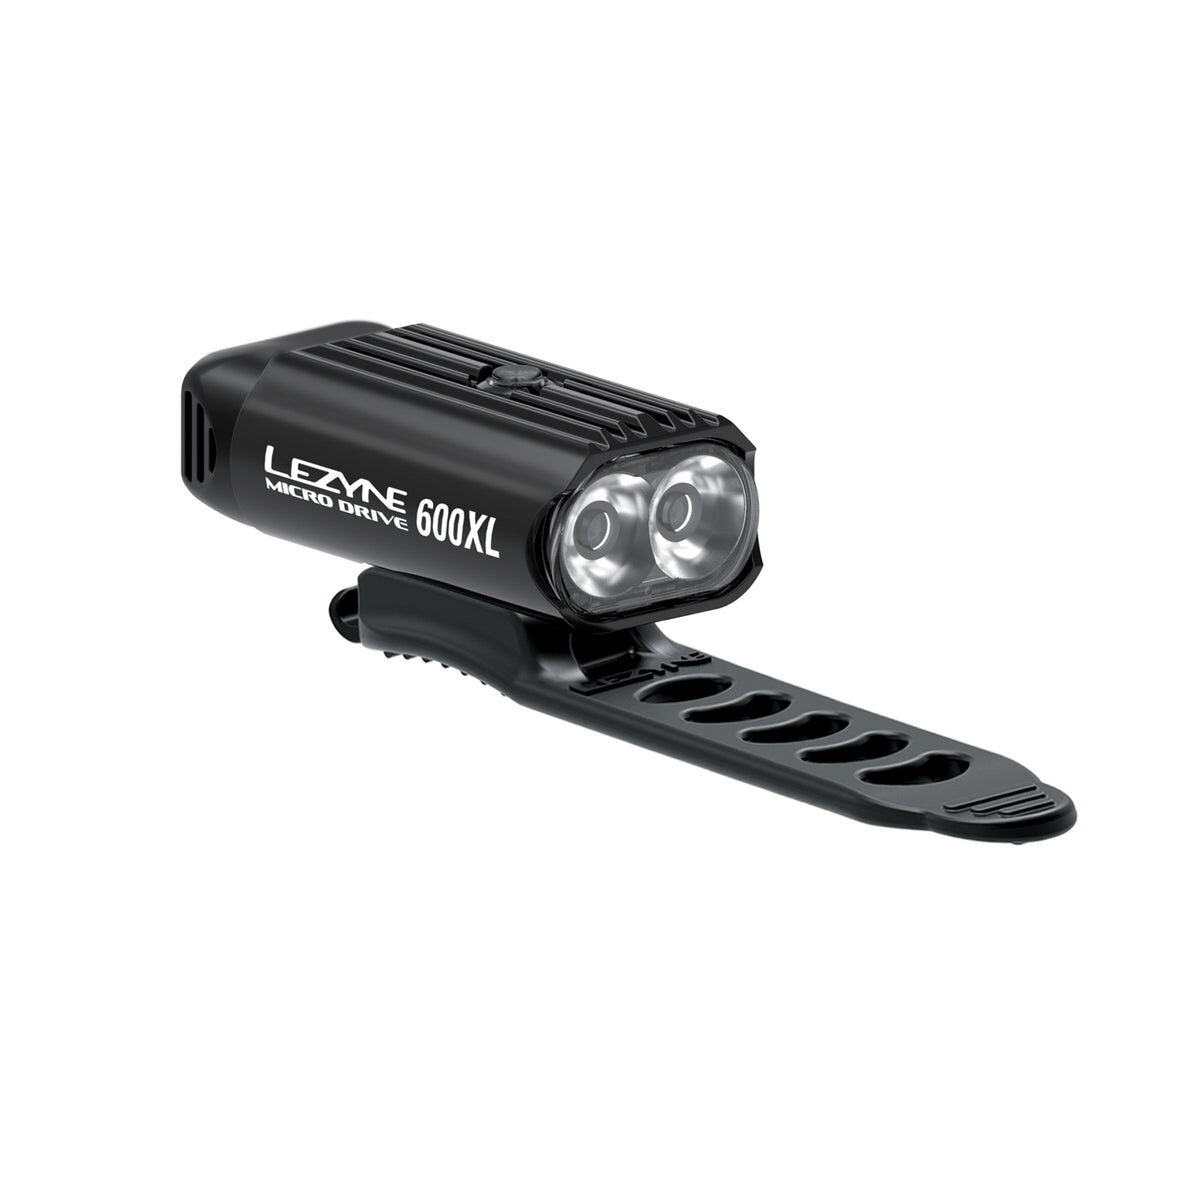 Lezyne Micro Drive 600XL - Bicycle lights sets | Hardloop